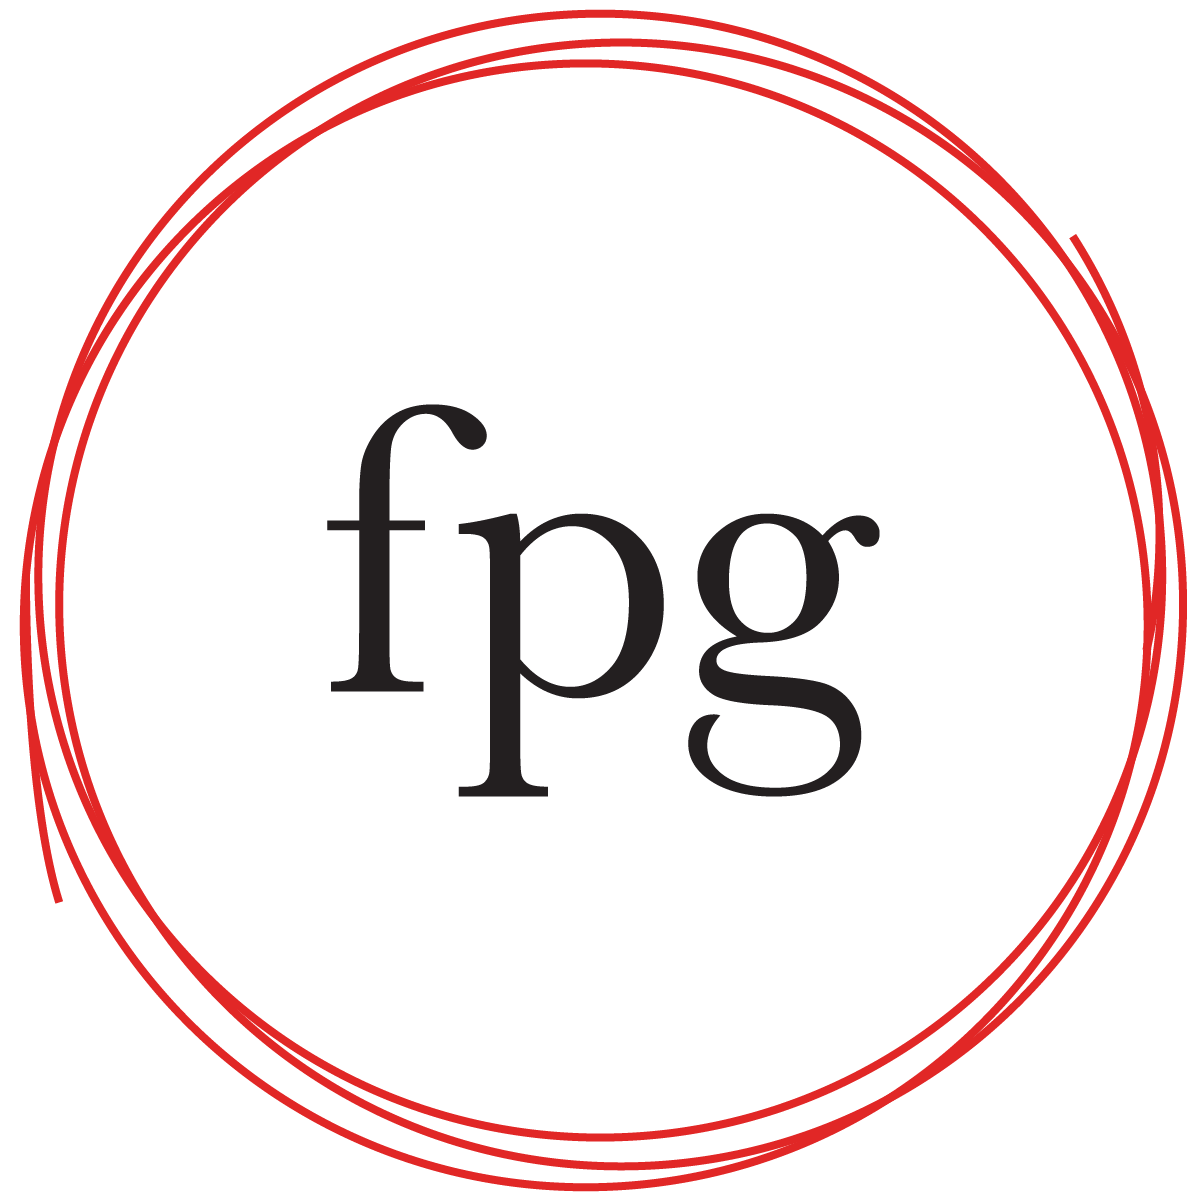 Frontline Performance Group logo